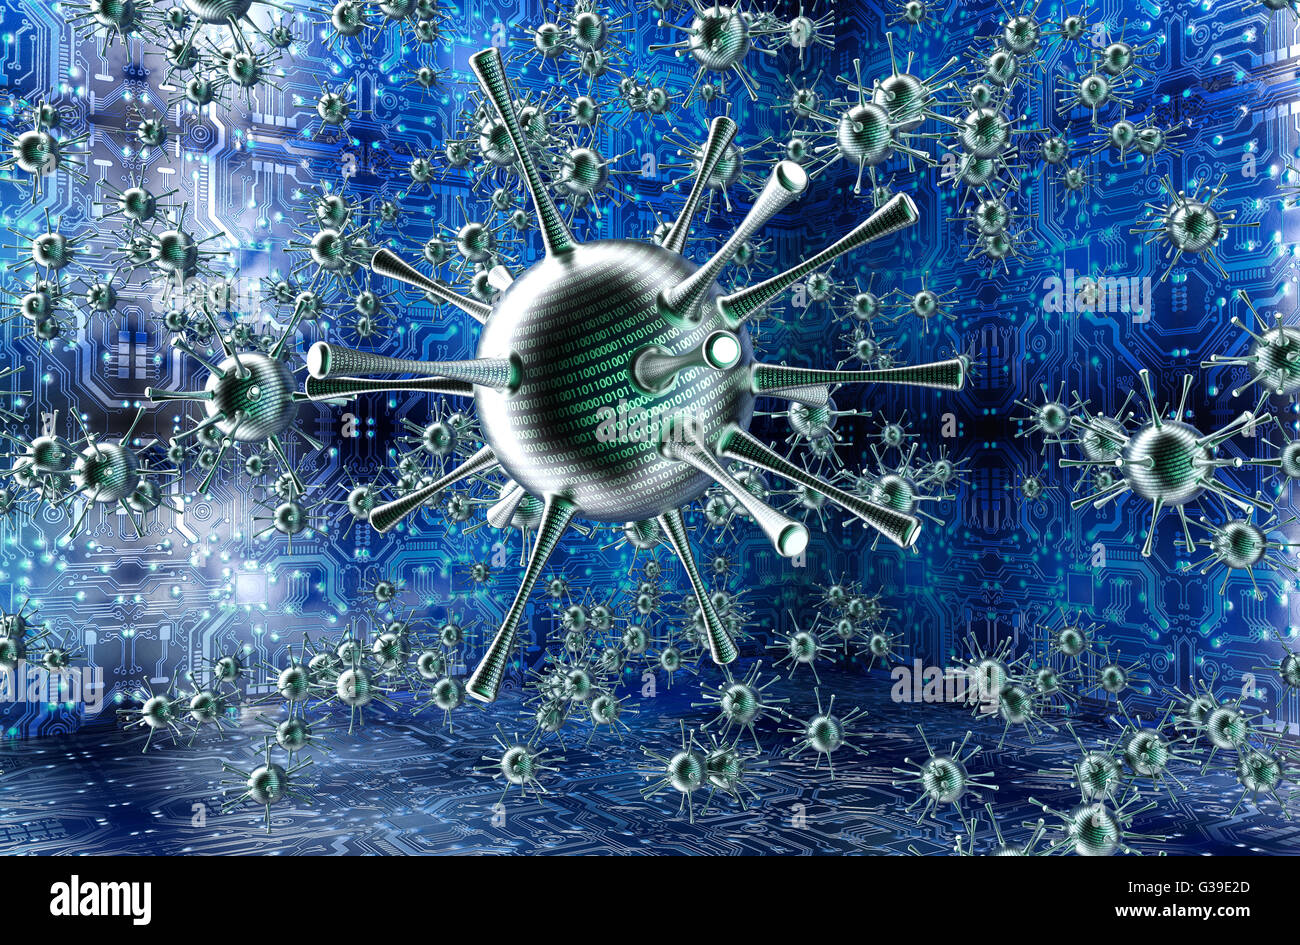 digitale Sicherheit Begriff Computervirus im elektronischen Umfeld, 3D illustration Stockfoto